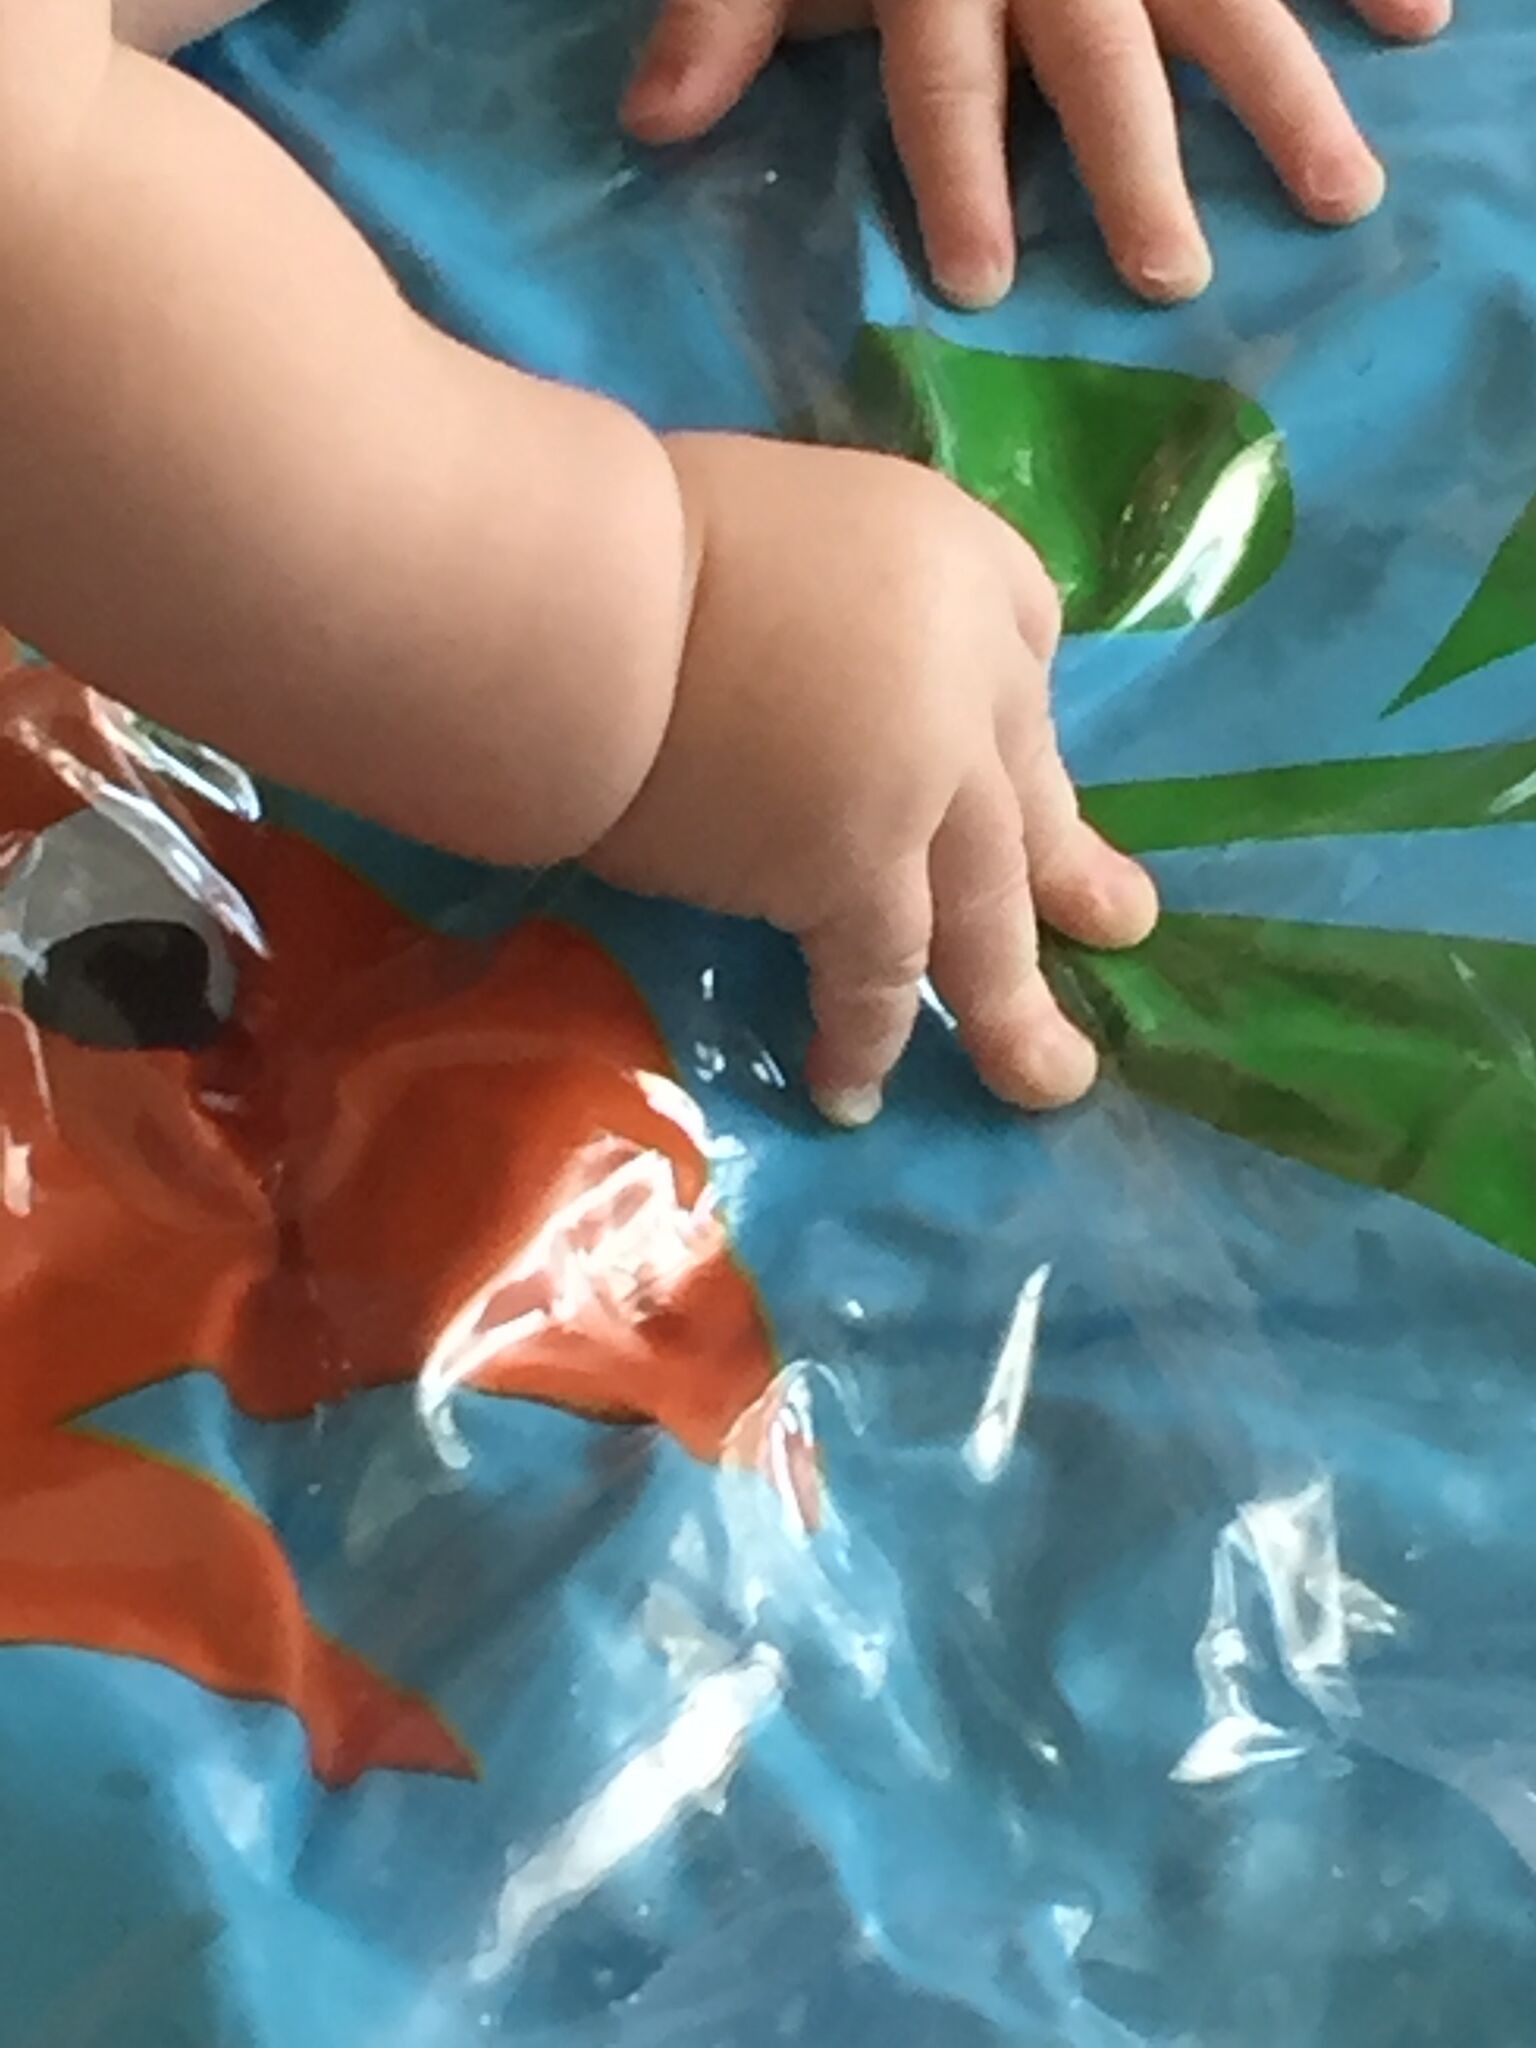 A baby's hands explore a splashpad